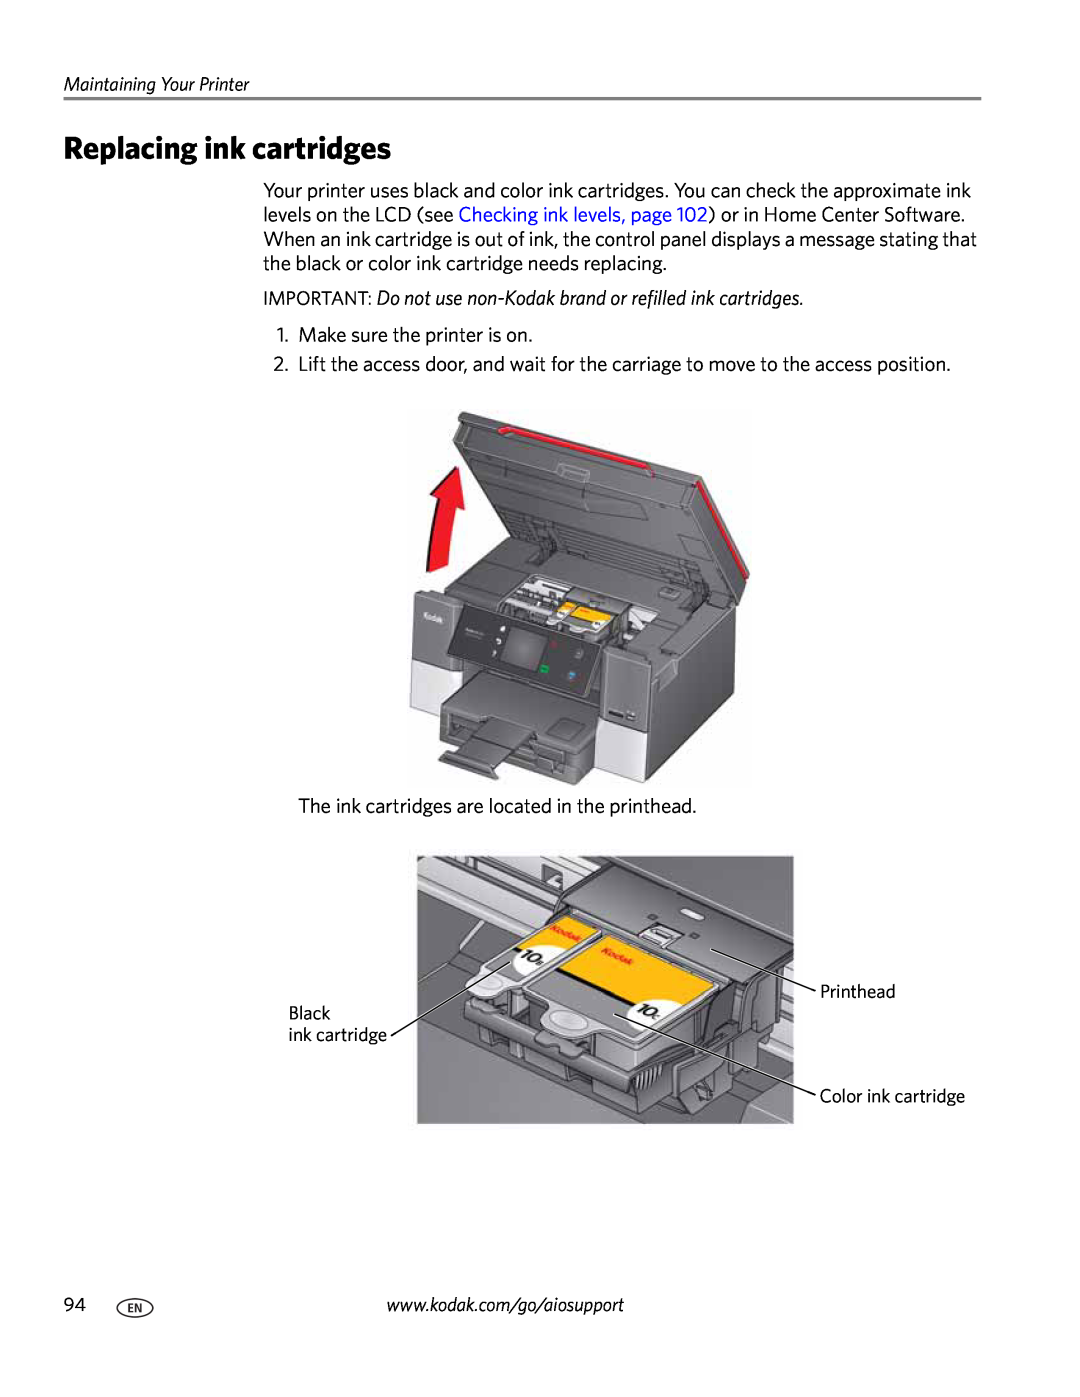 Kodak 7.1 manual Replacing ink cartridges, IMPORTANT Do not use non-Kodak brand or refilled ink cartridges 